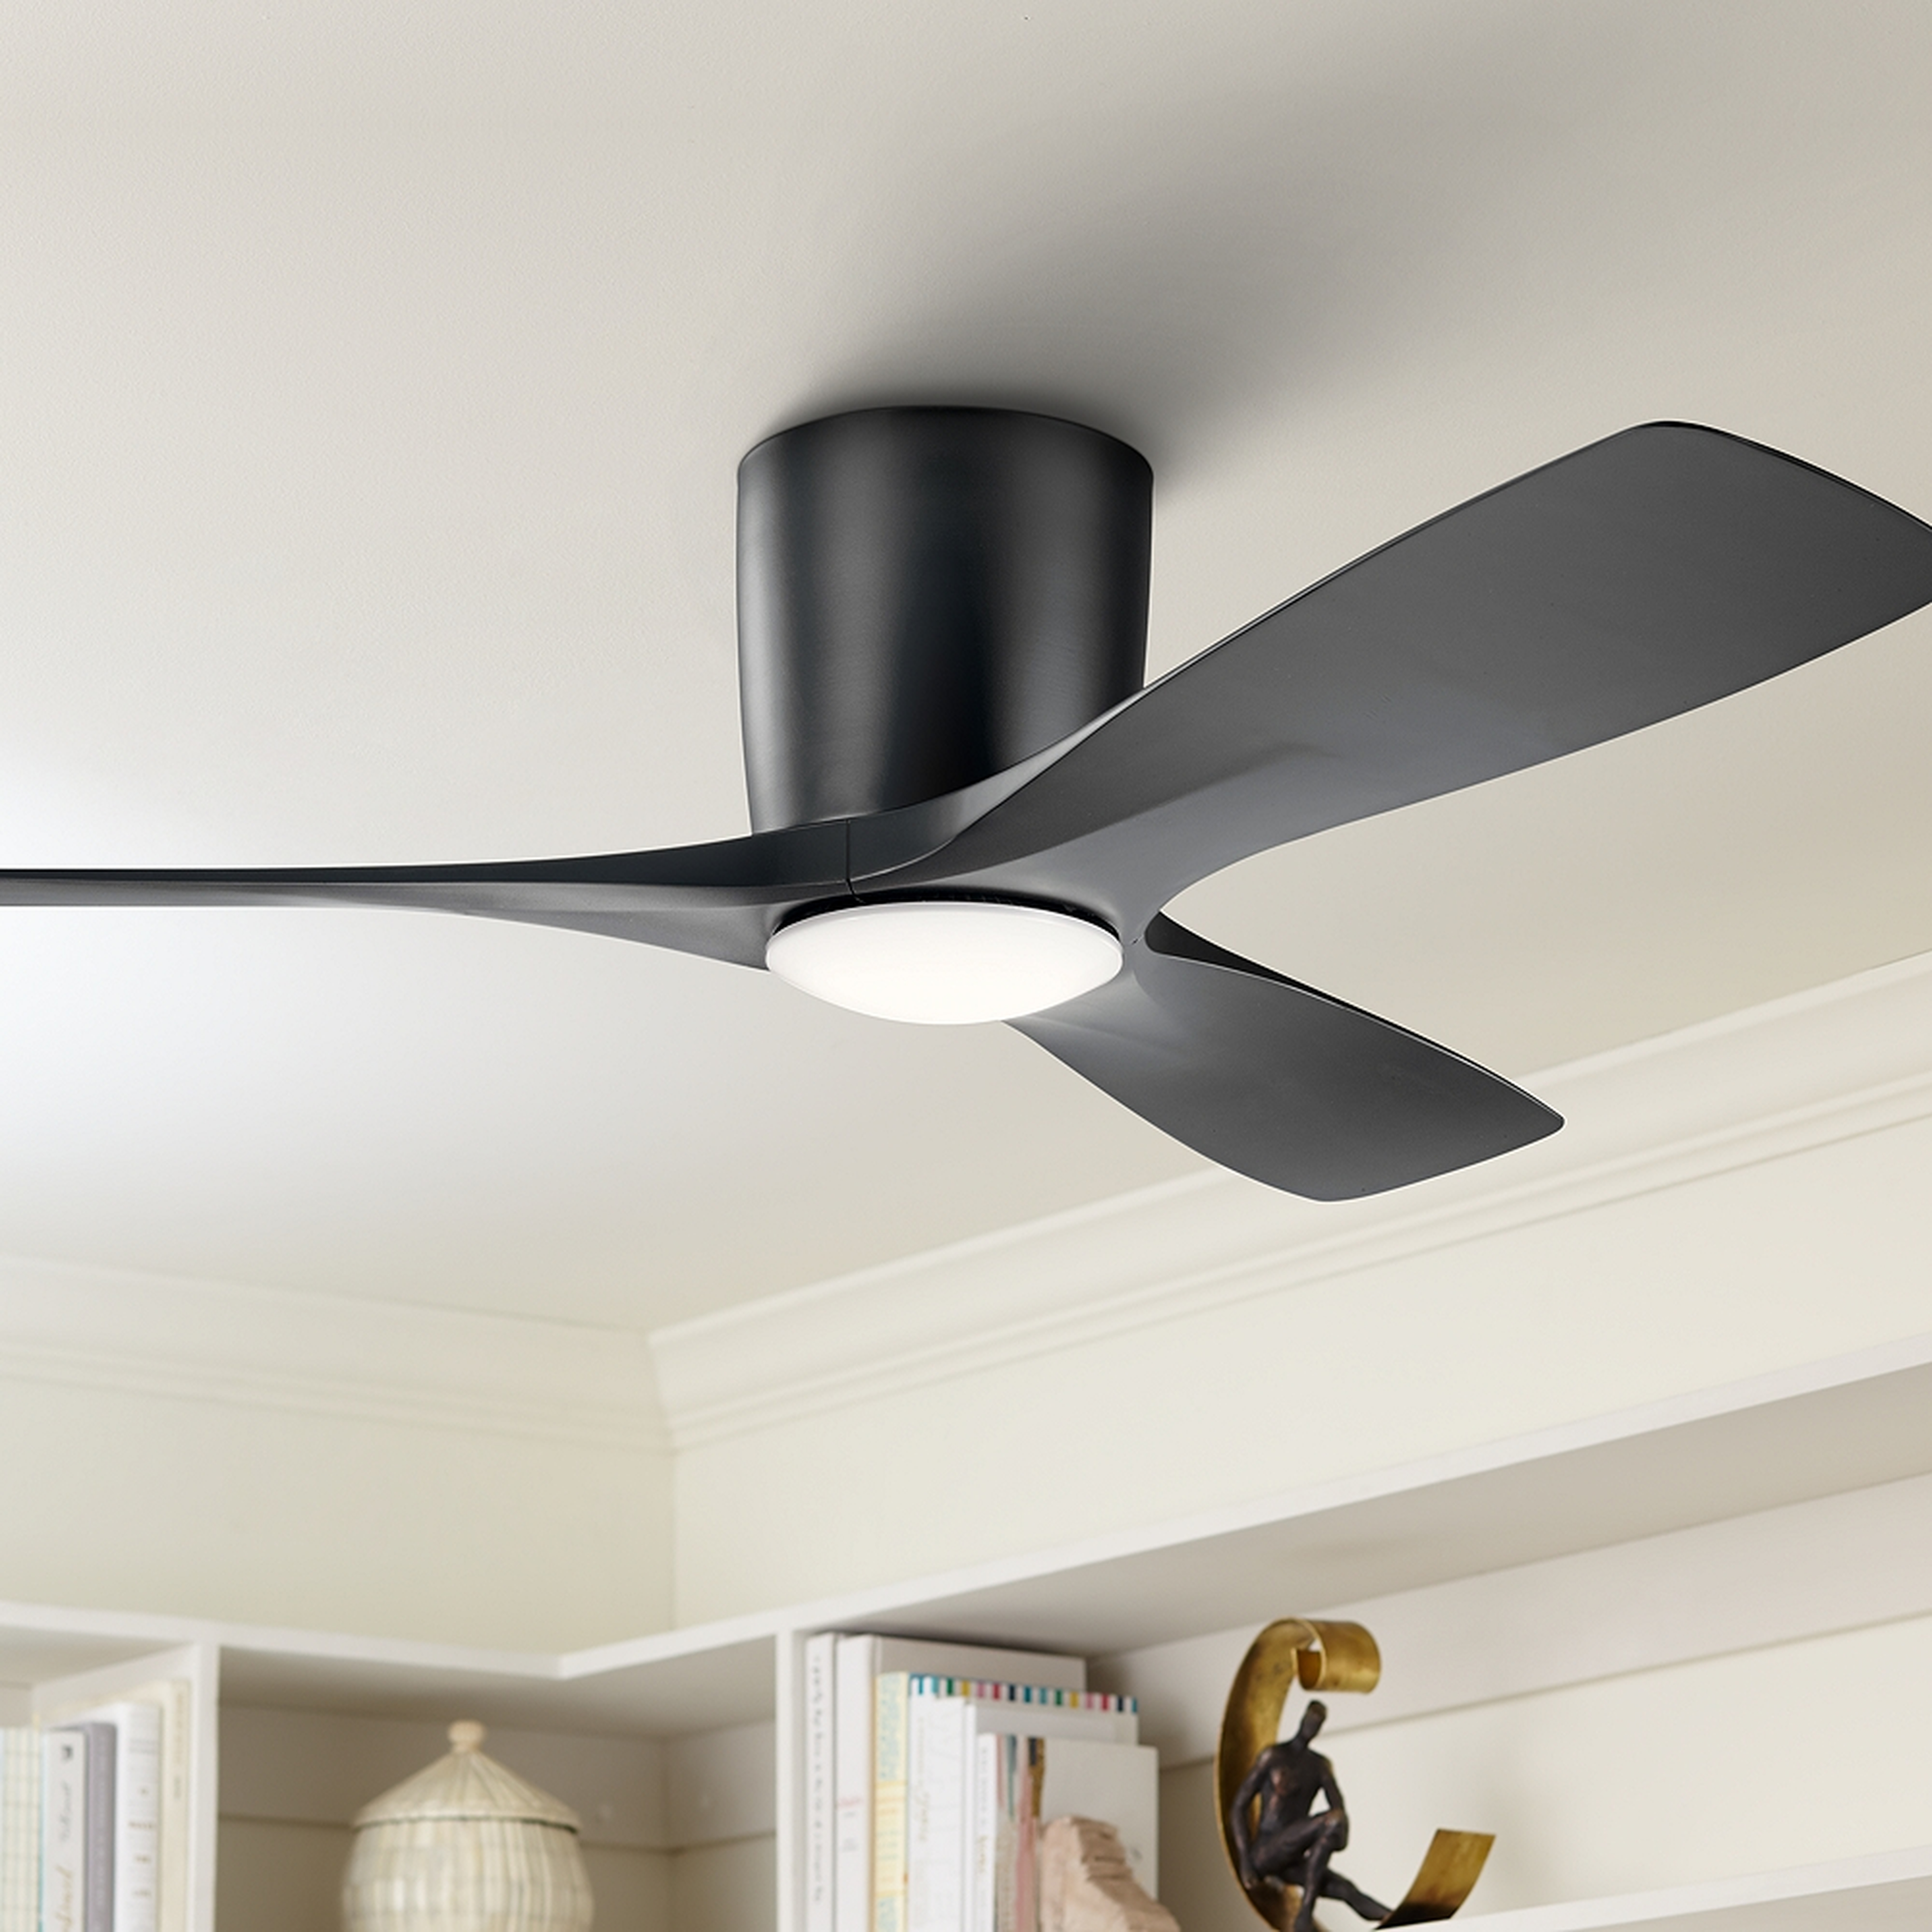 48" Kichler Volos Satin Black Hugger LED Ceiling Fan - Style # 83G85 - Lamps Plus